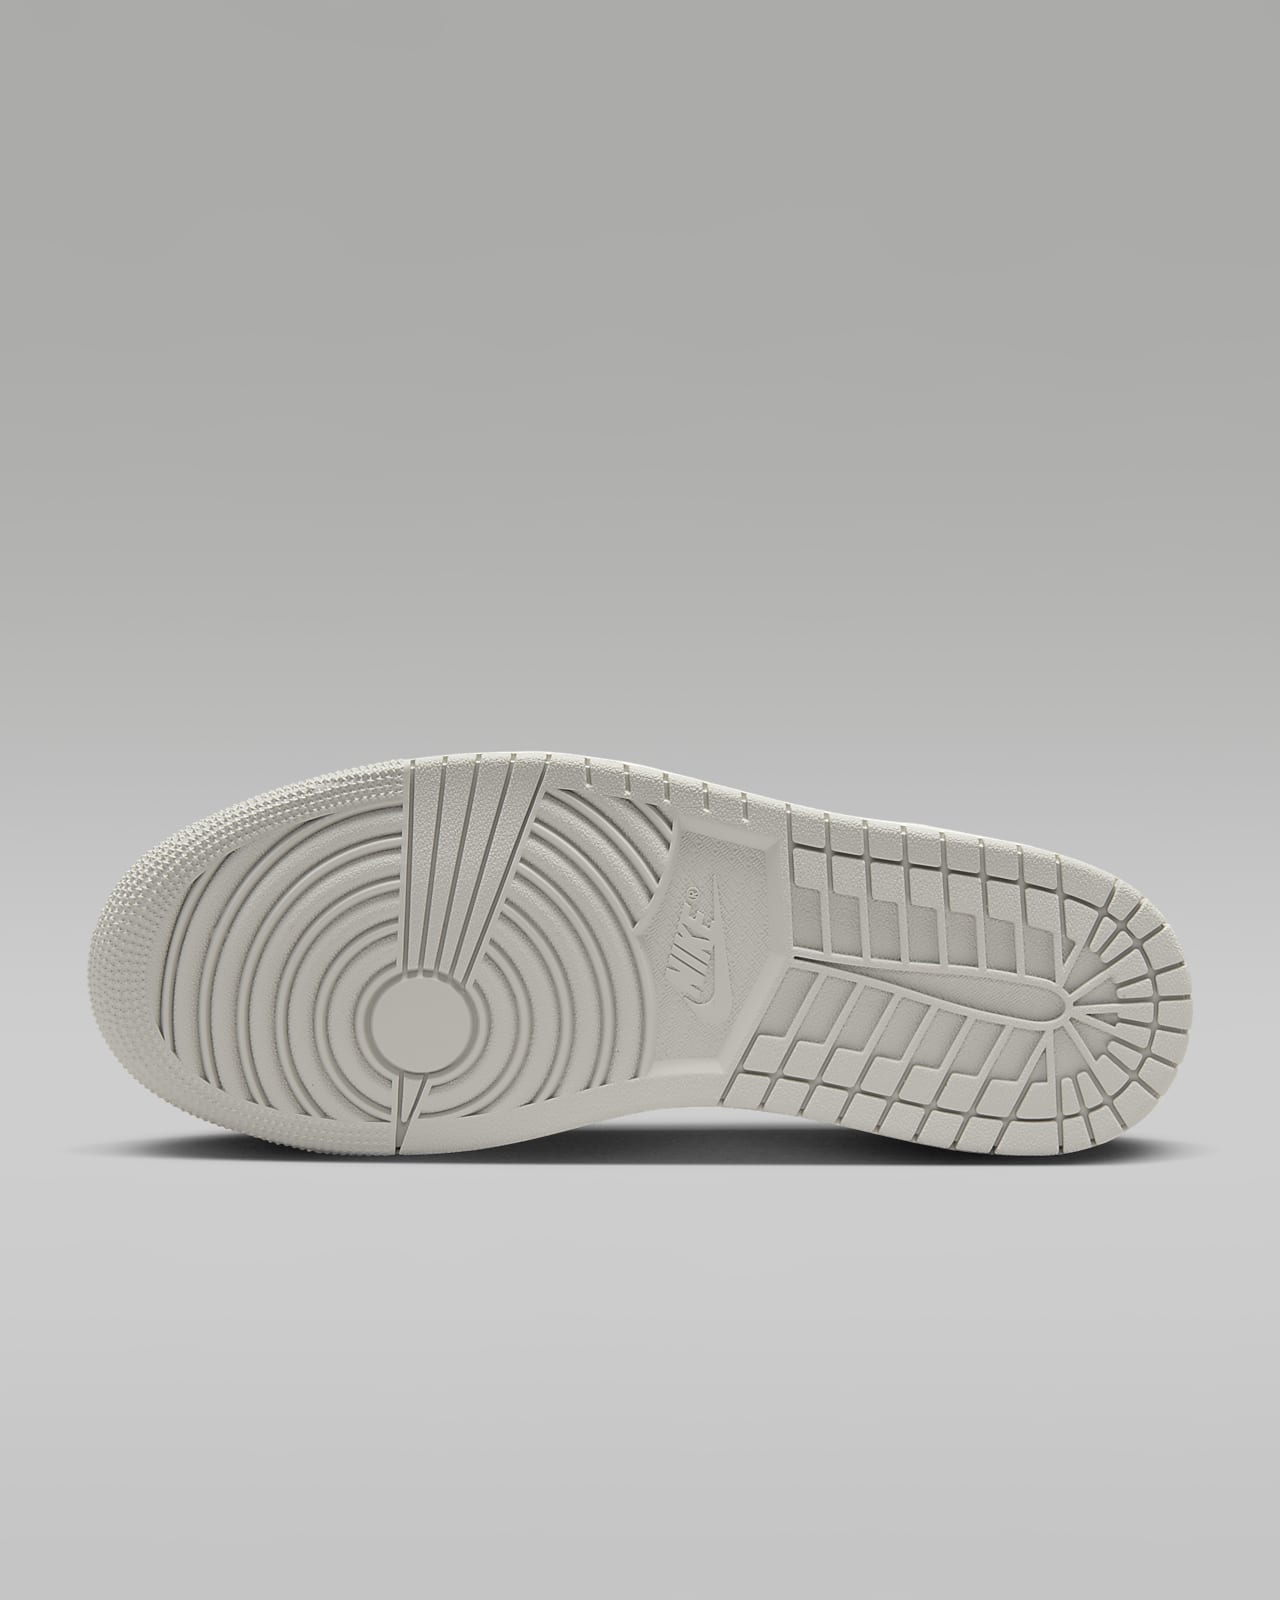 Alternative Ways To Style the Air Jordan 1 Silver Toe + In Depth